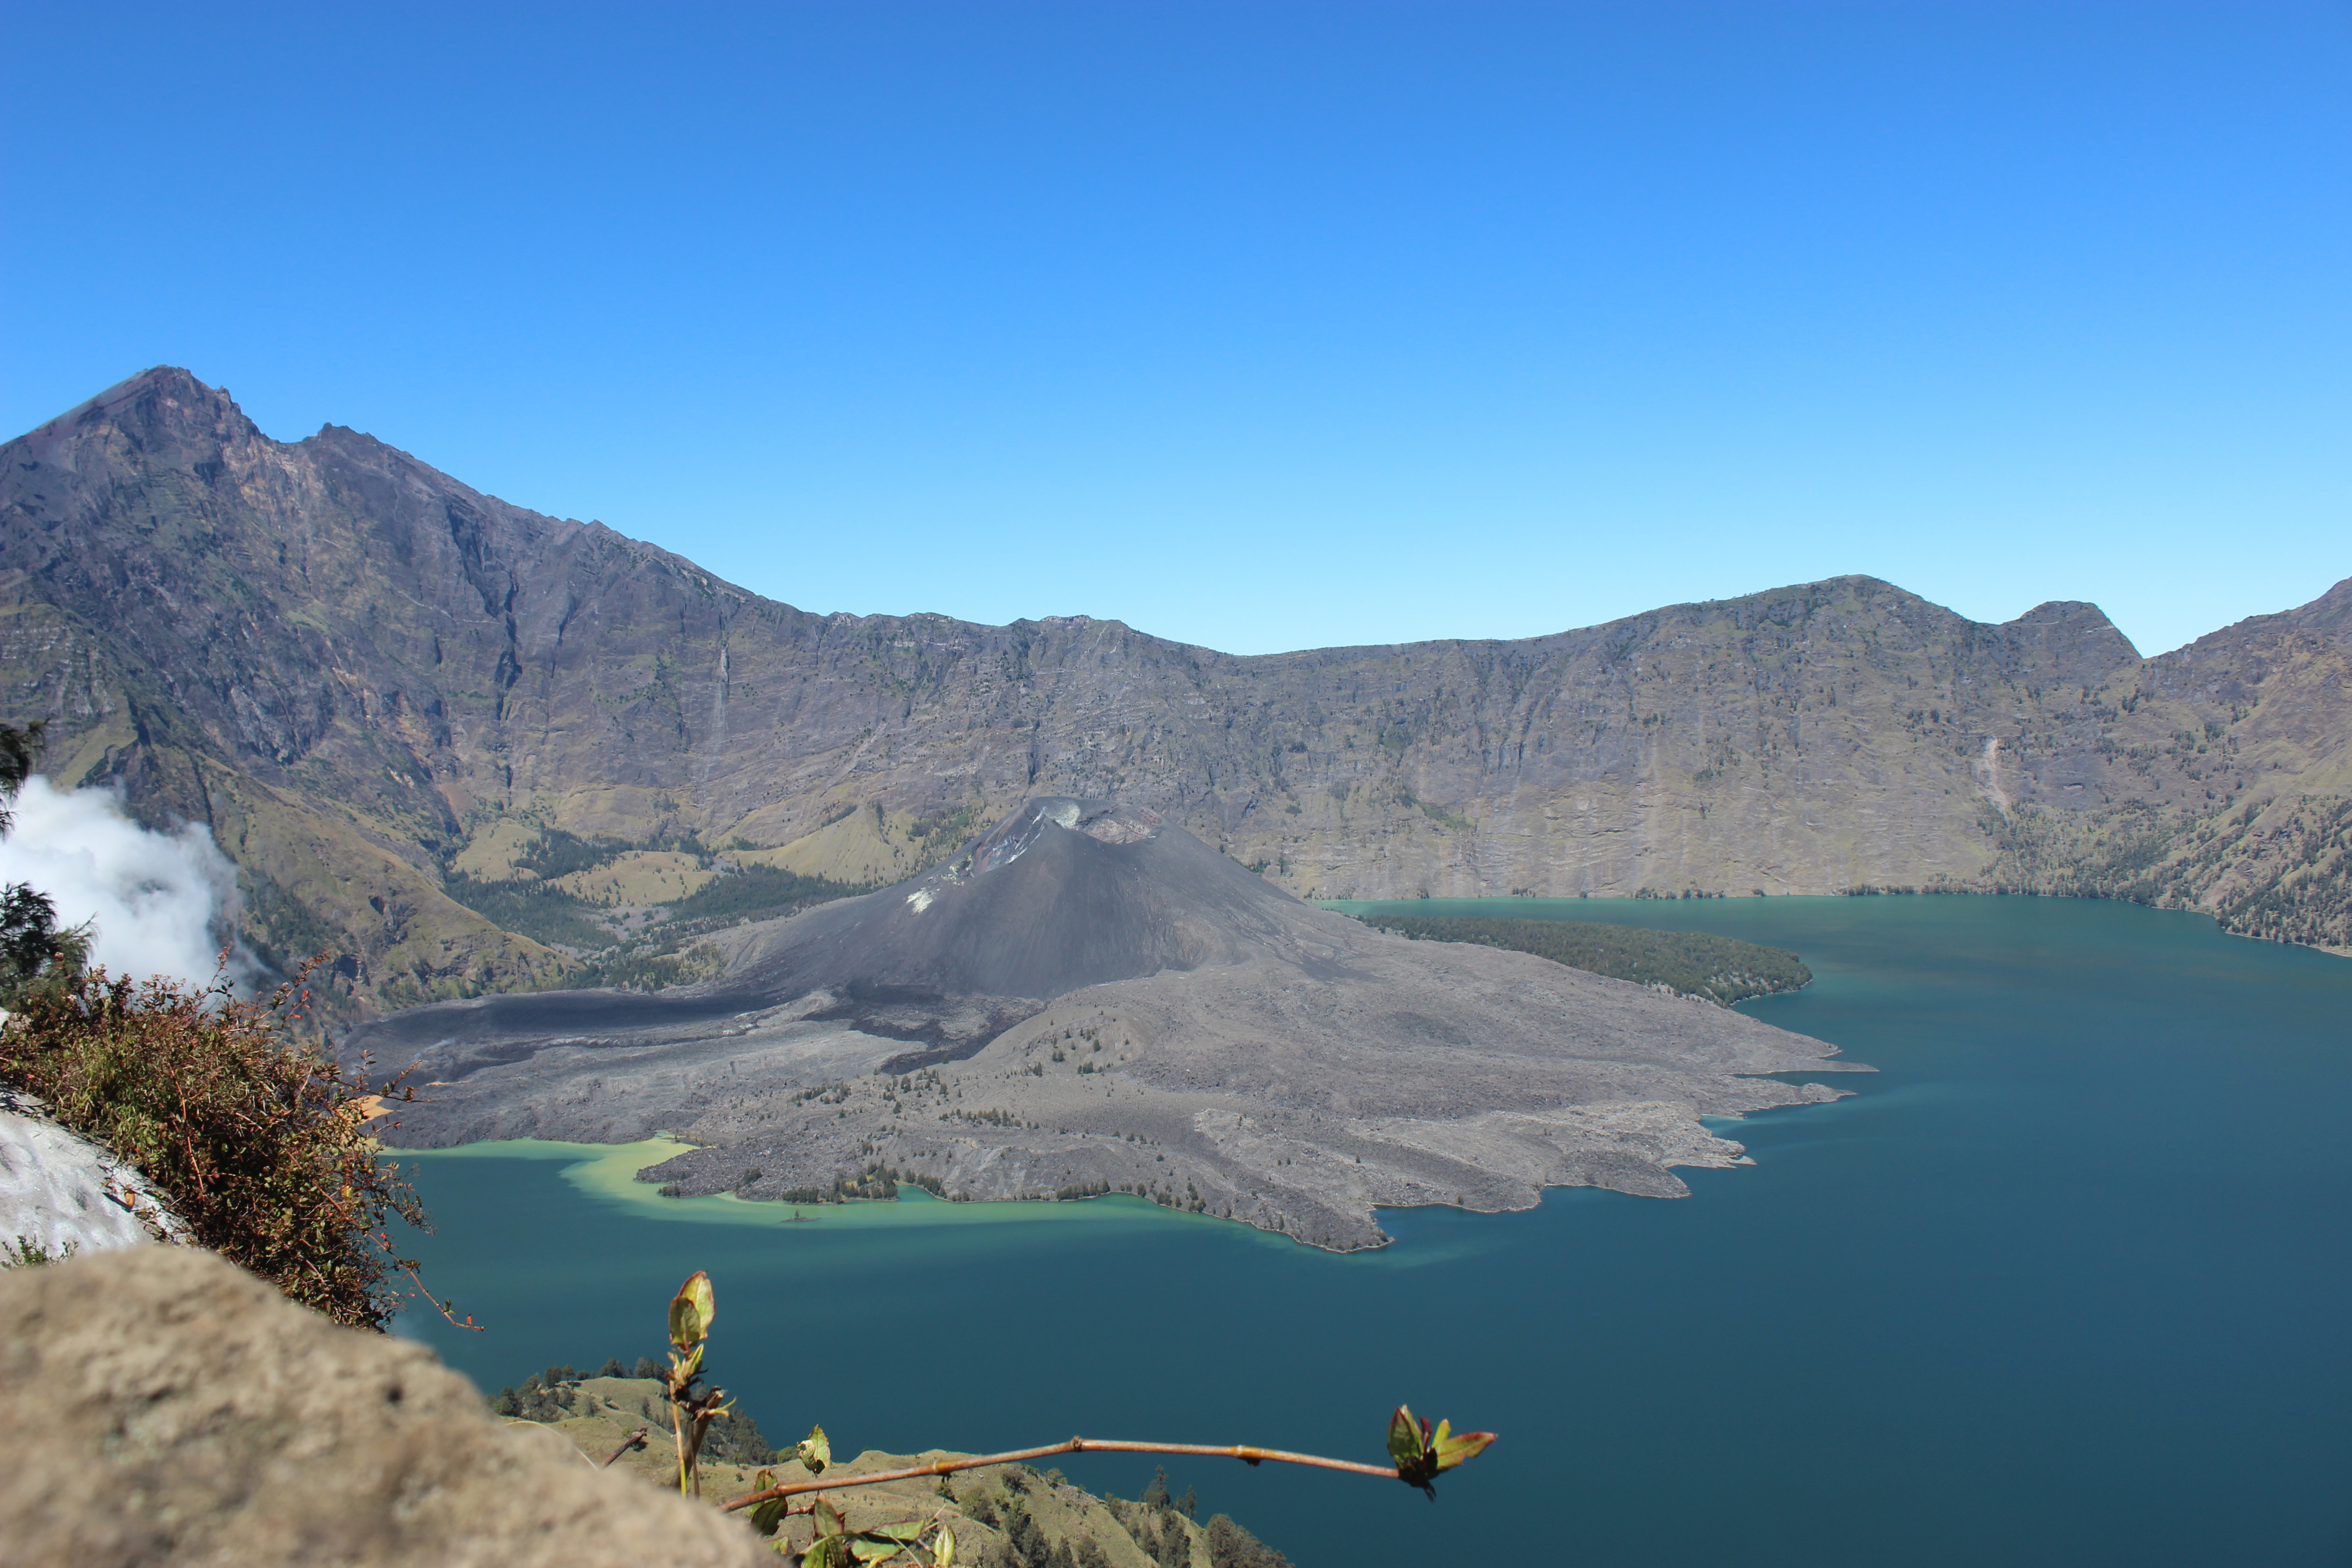 Lombok’s Mt. Rinjani is a popular volcano for trekking. Photo: Wikimedia Commons